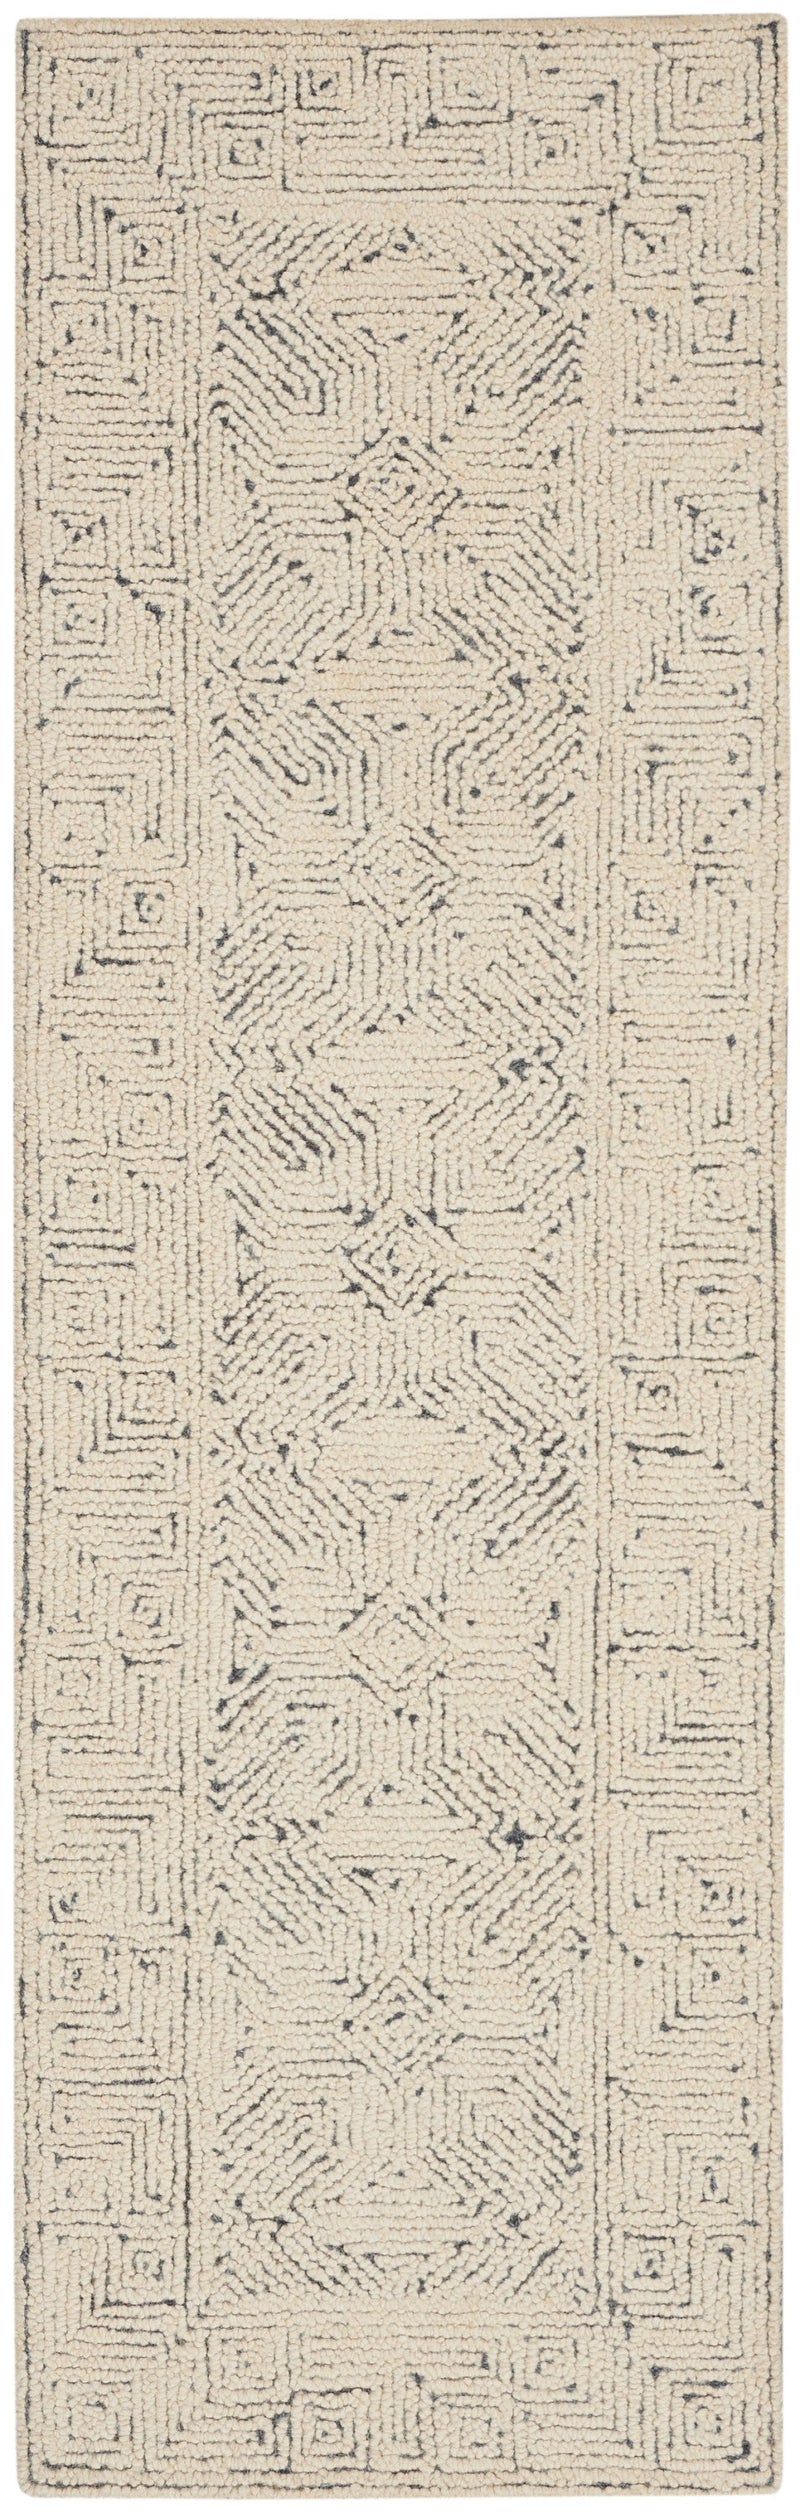 media image for colorado handmade ivory navy rug by nourison 99446791580 redo 2 248